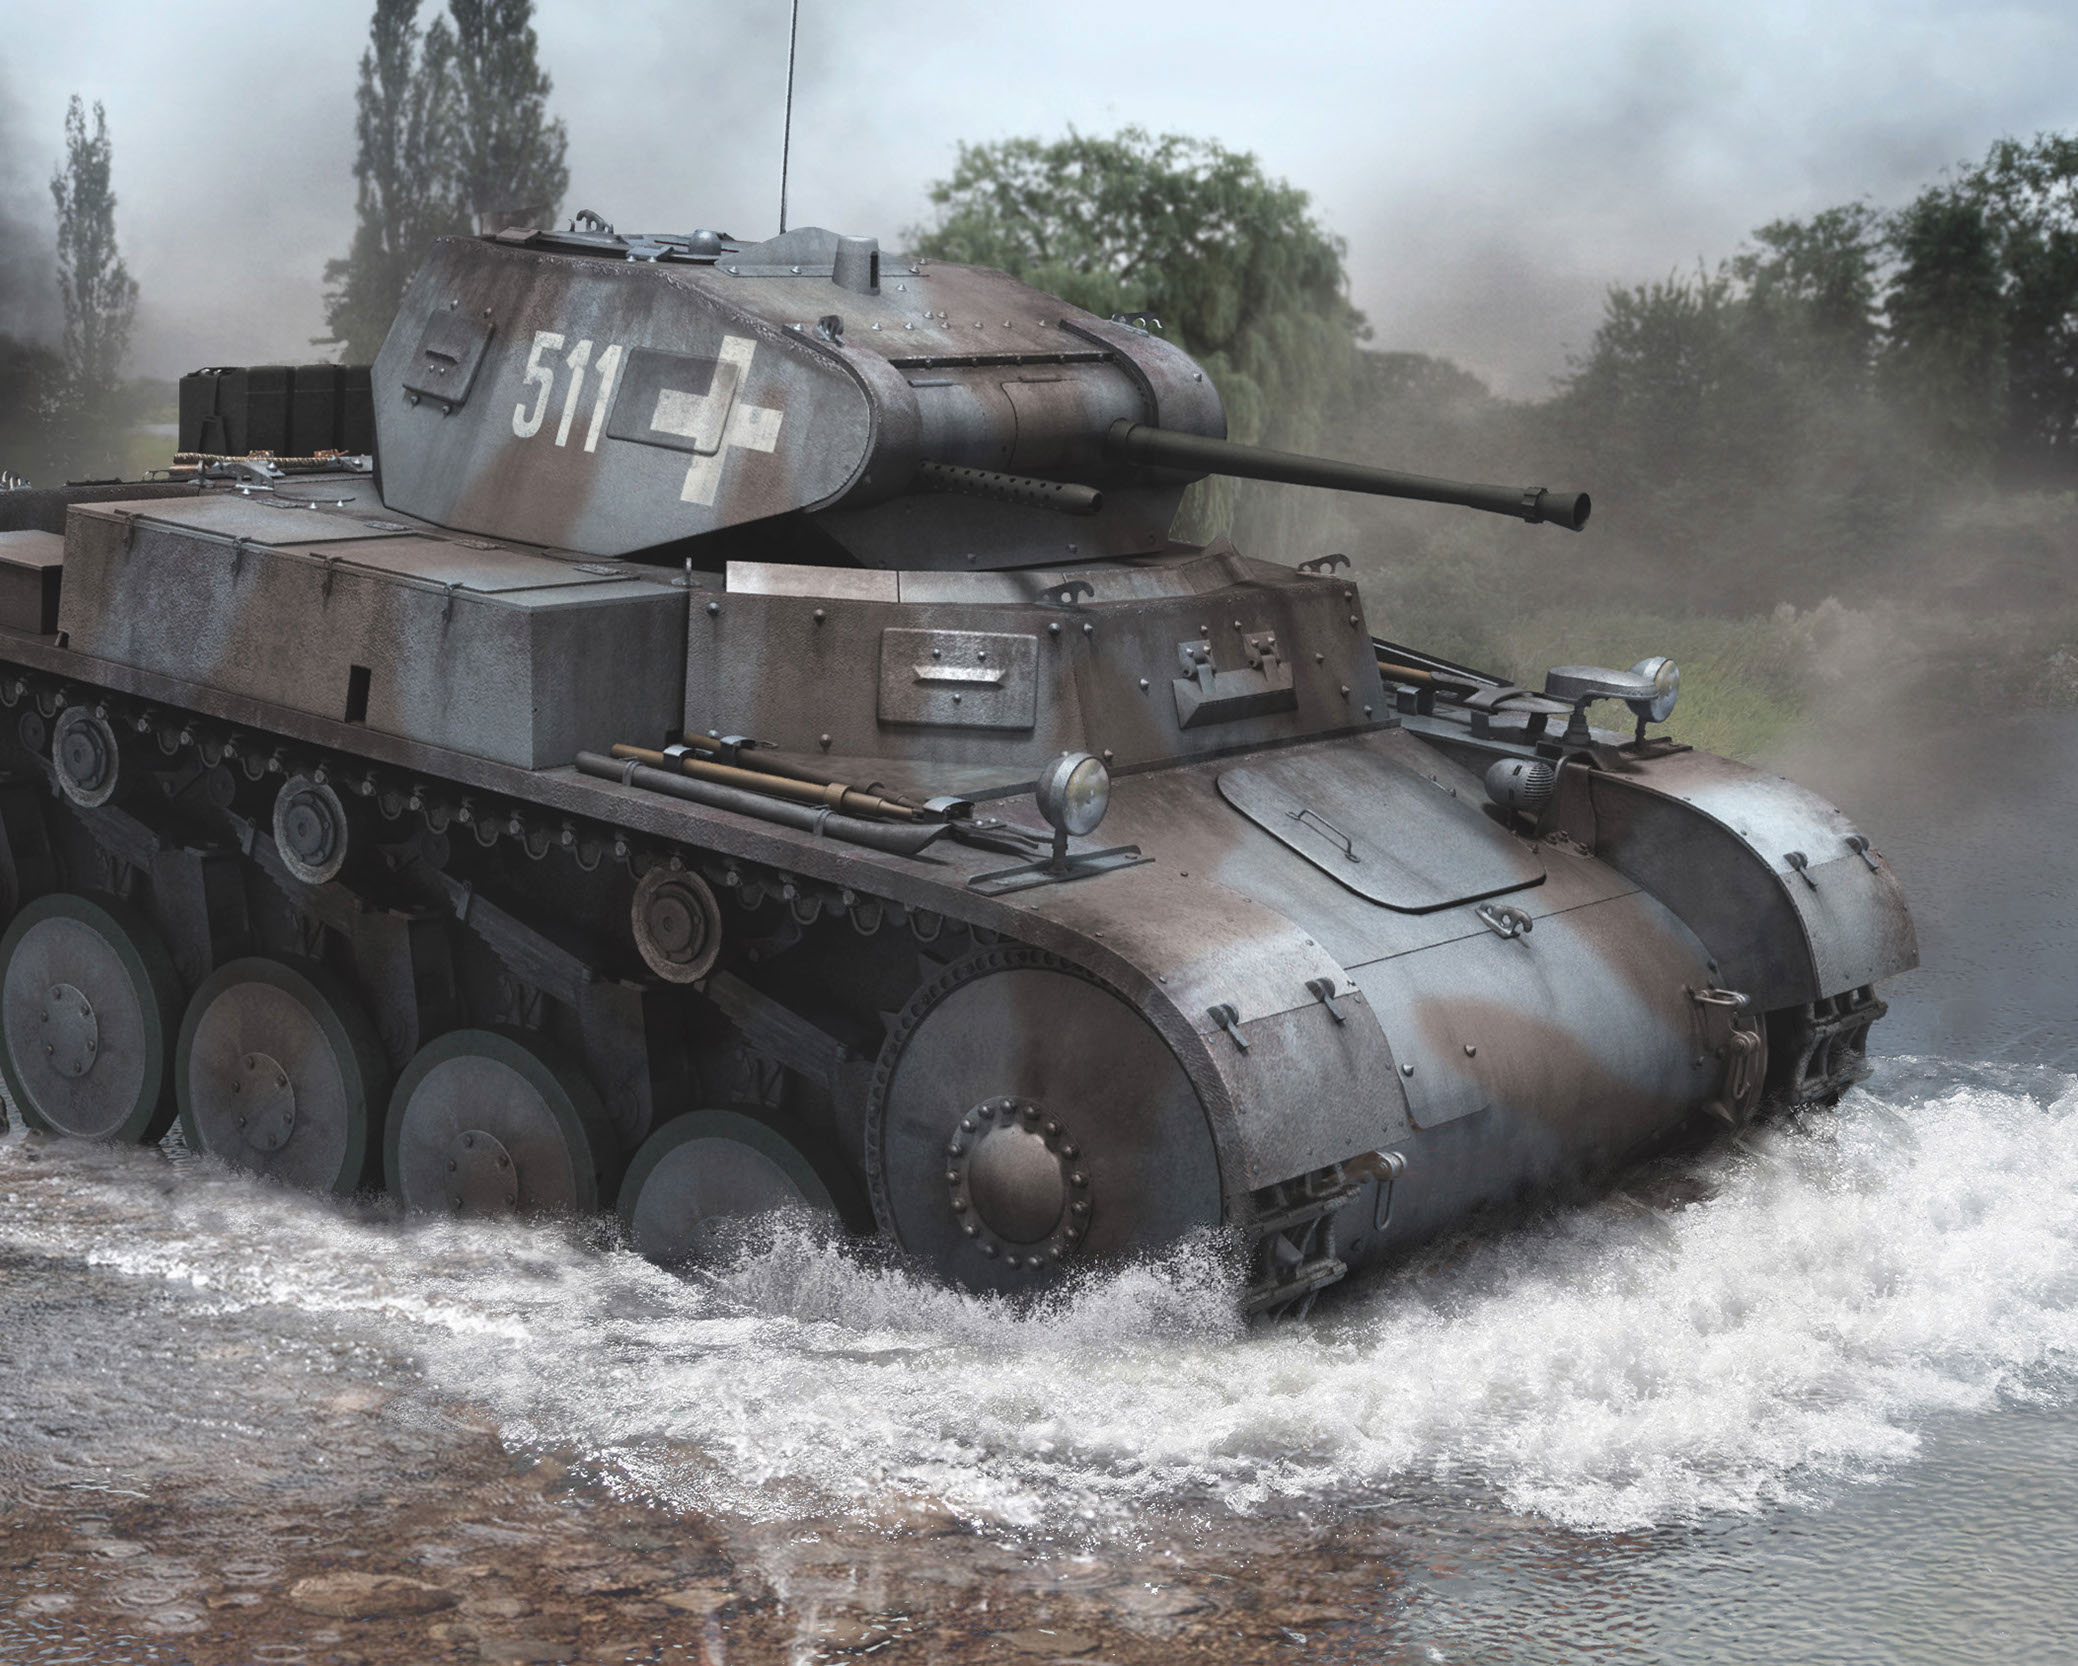 ww2 tank concept art